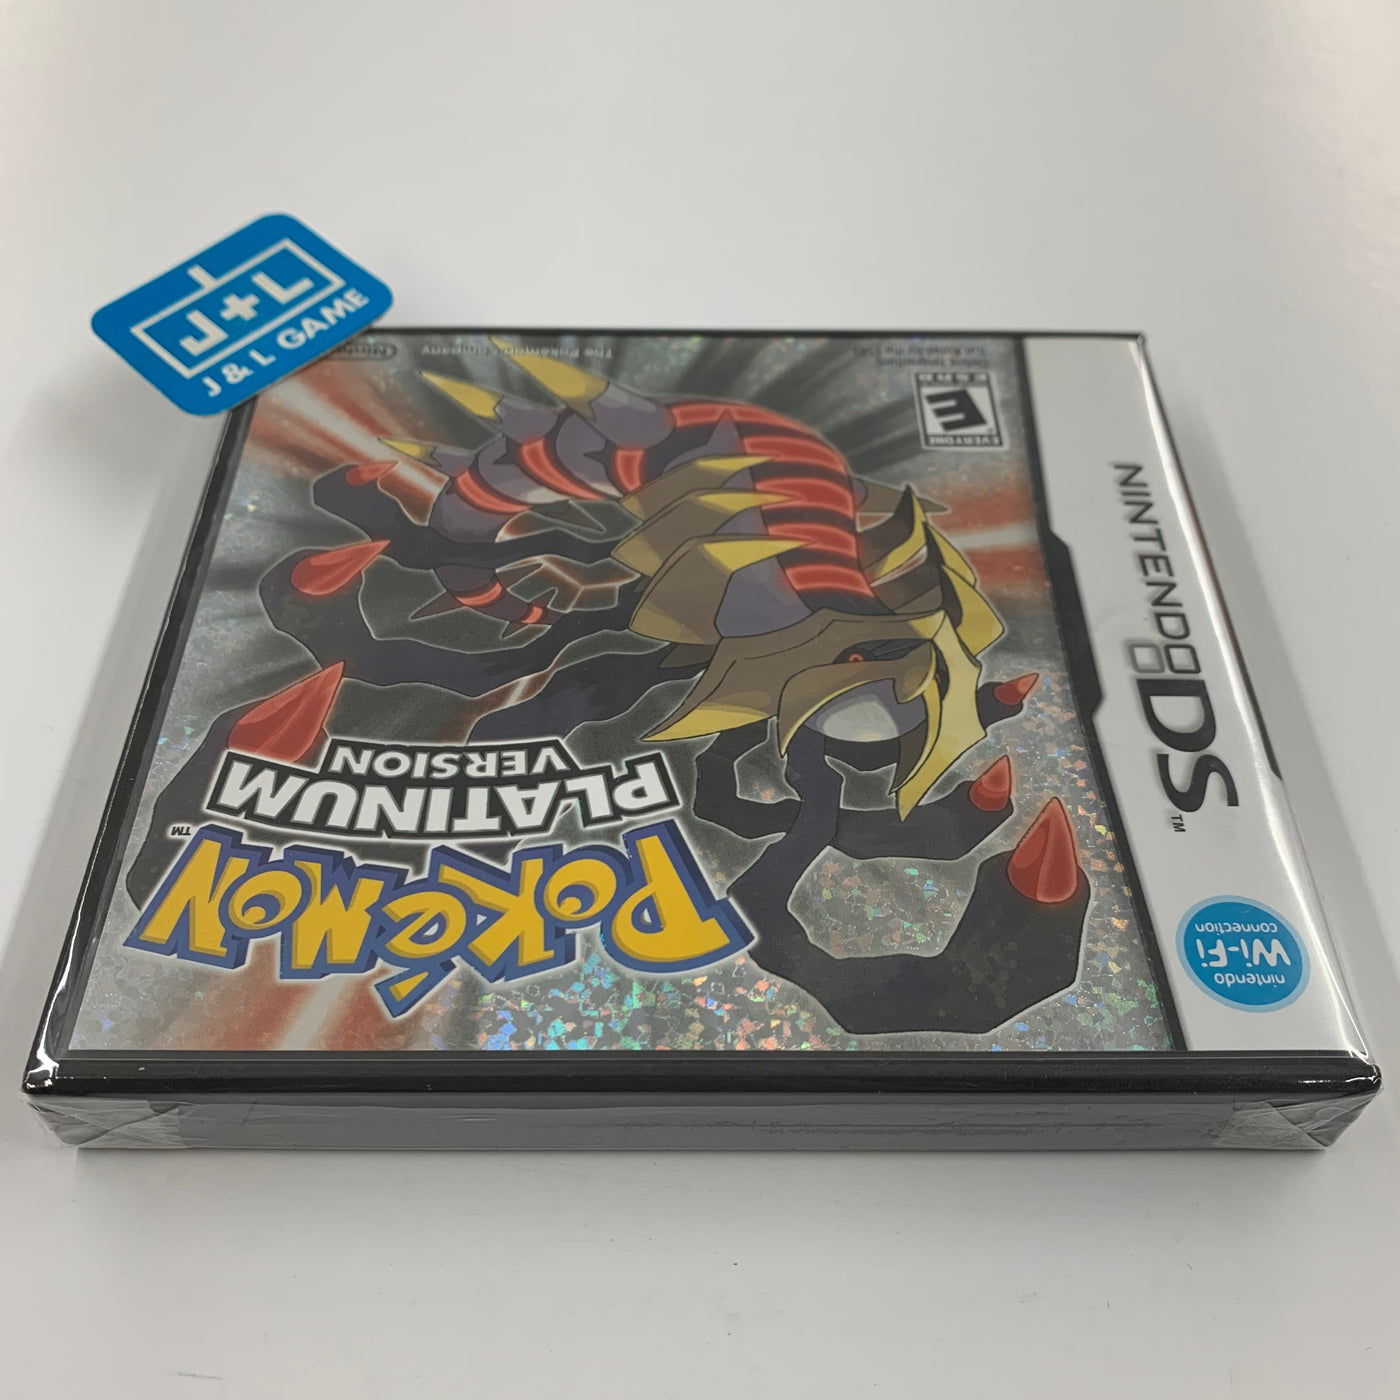 Pokemon Platinum Version - Nintendo DS, Nintendo DS